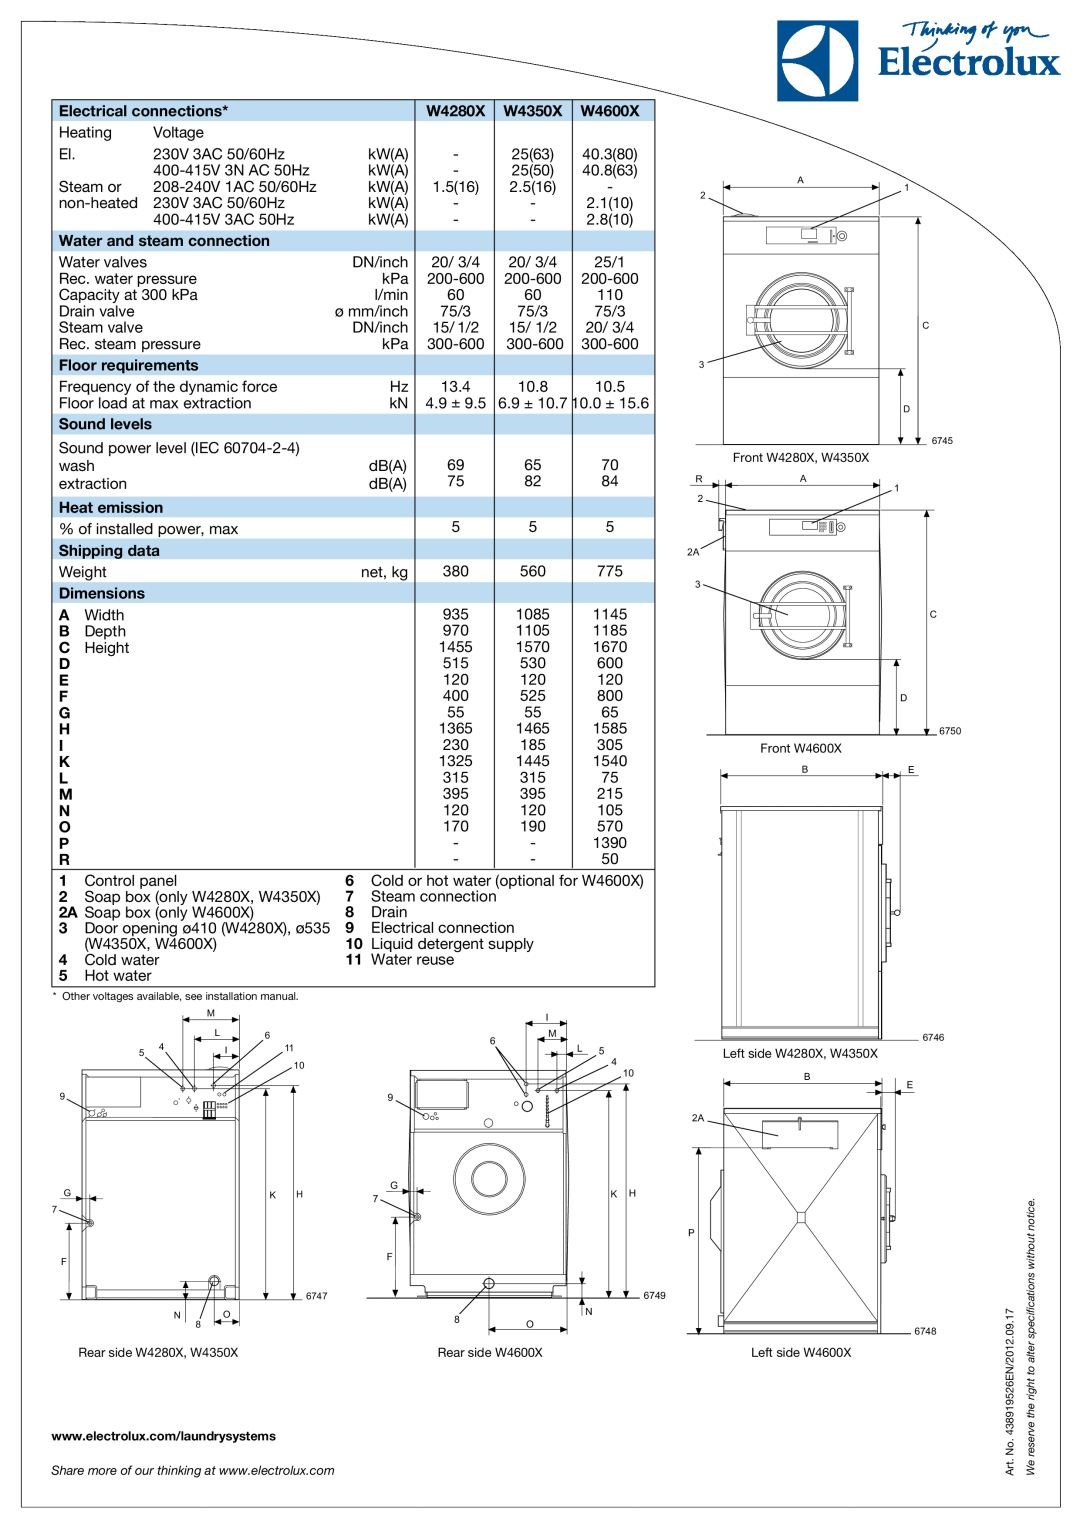 Electrolux W4350X, W4280X, W4600X specifications Electrical connections 